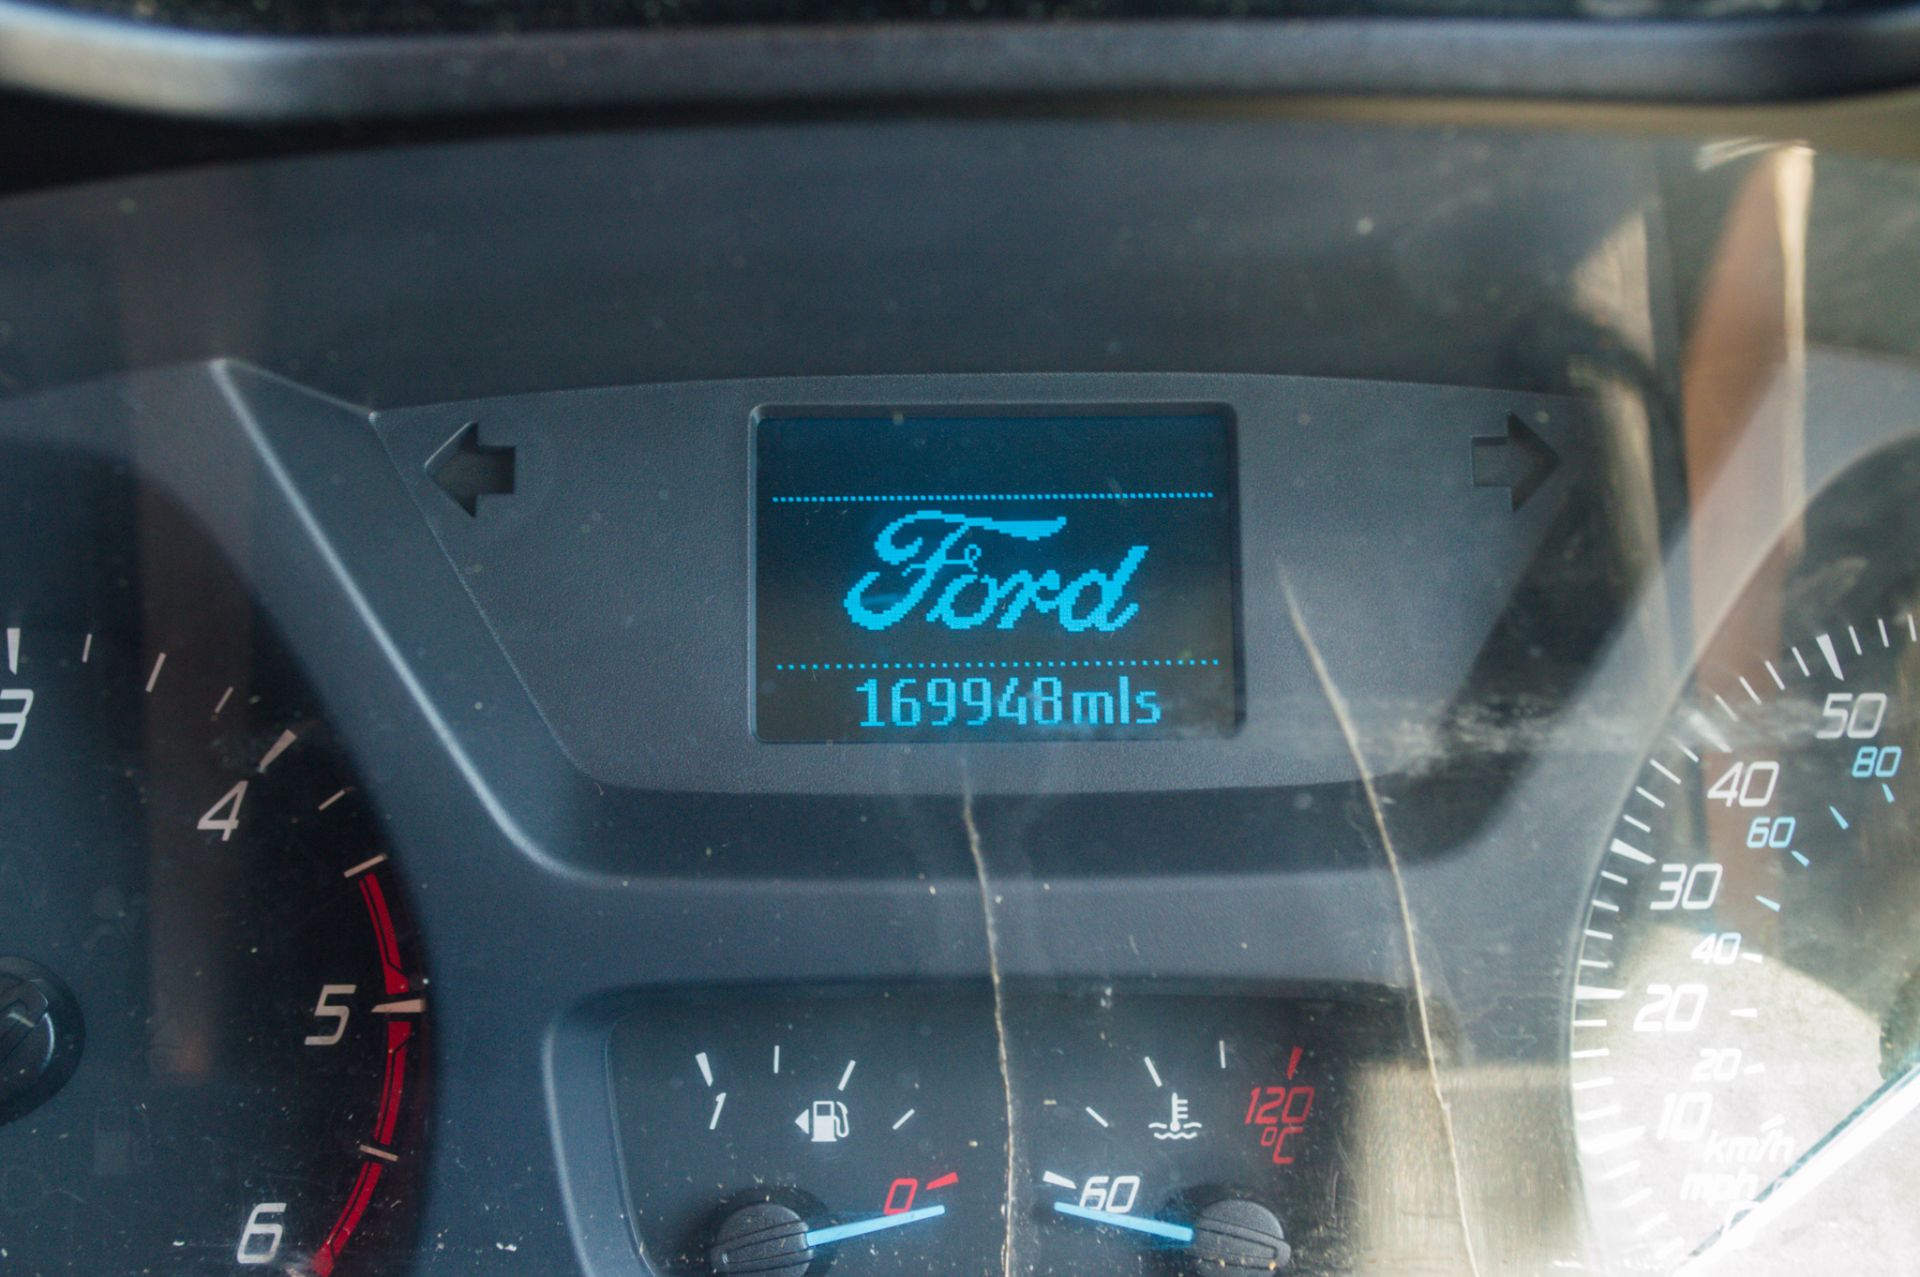 Ford Transit 350 hi-top 2.2 diesel manual panel van Reg No: NJ64 ZFL Date of Registration: 08/10/ - Image 24 of 24